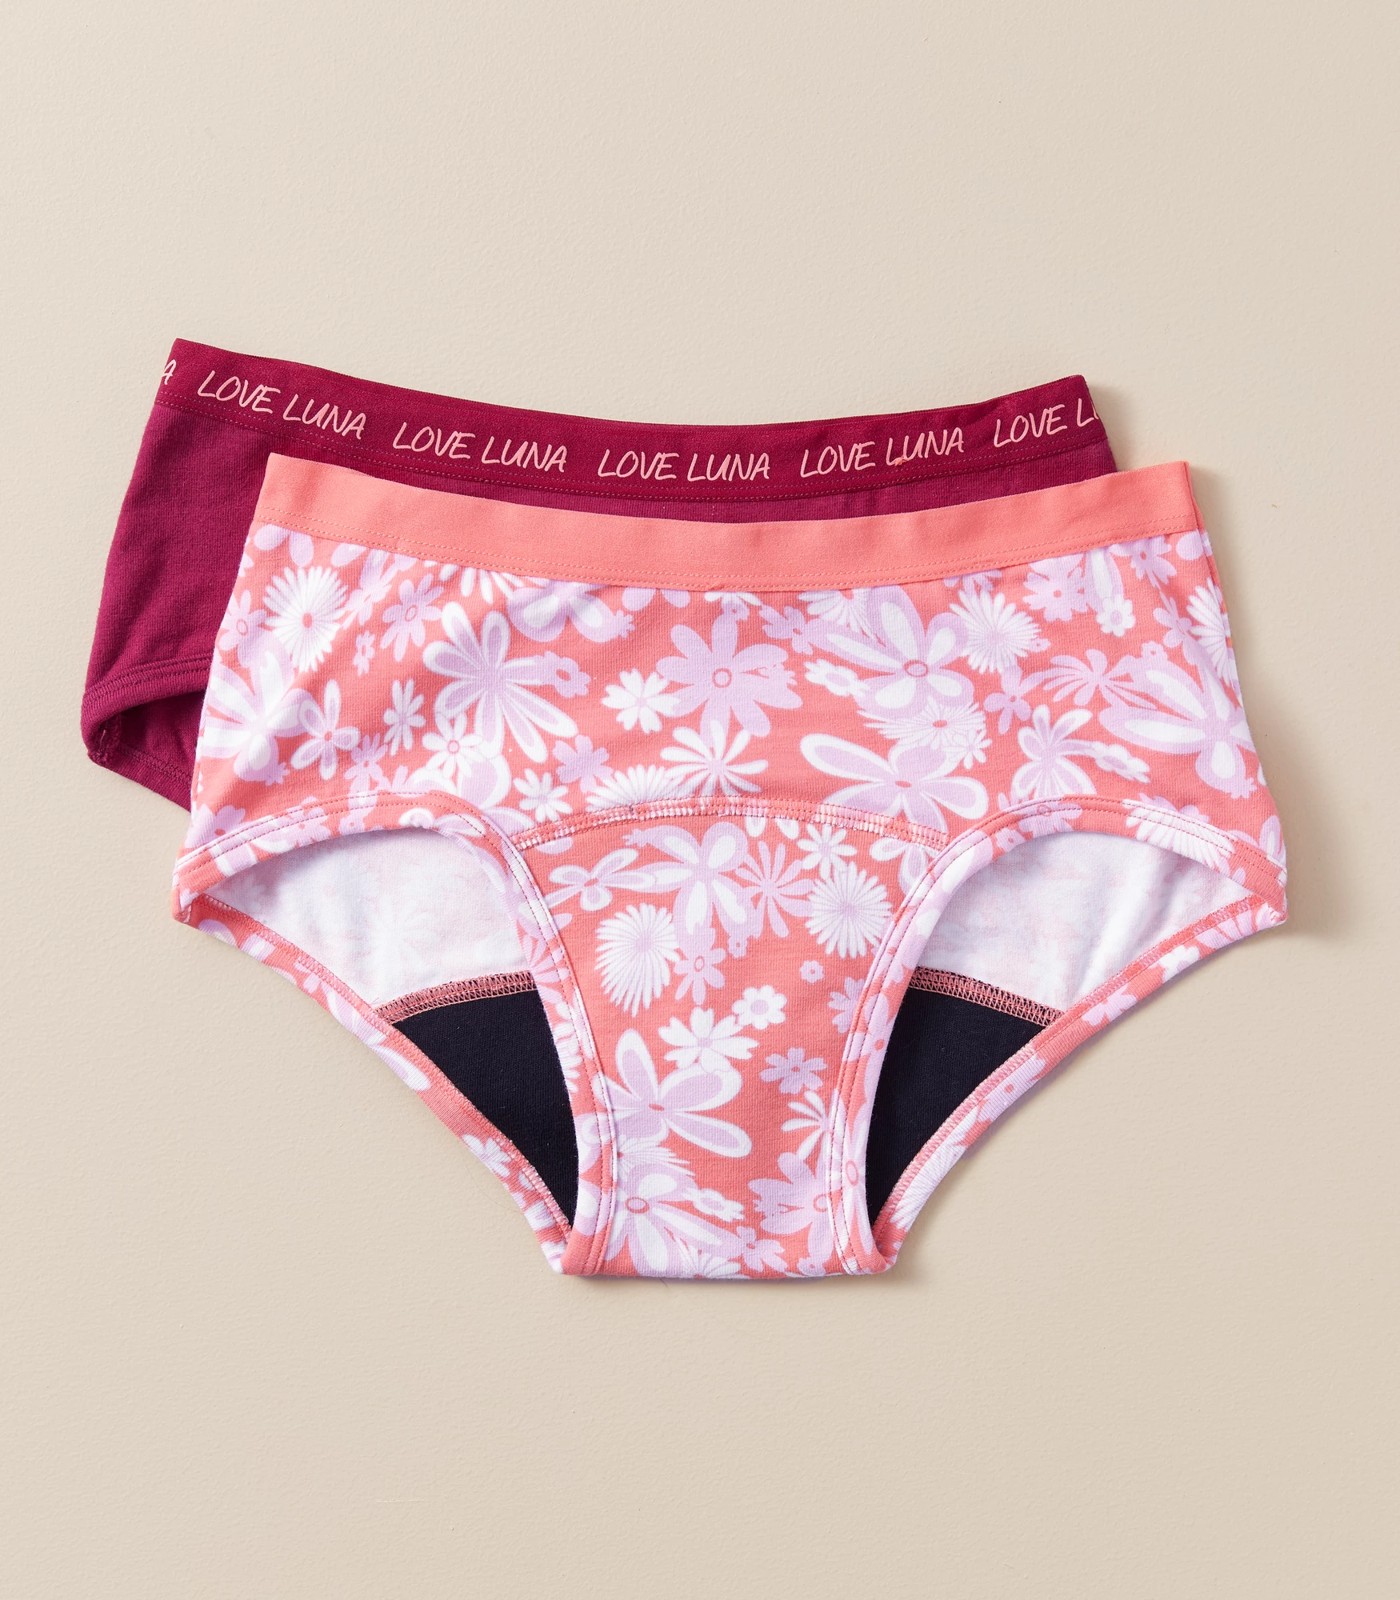 Love Luna Teens Boyleg Period Underwear - The Nappy Lady